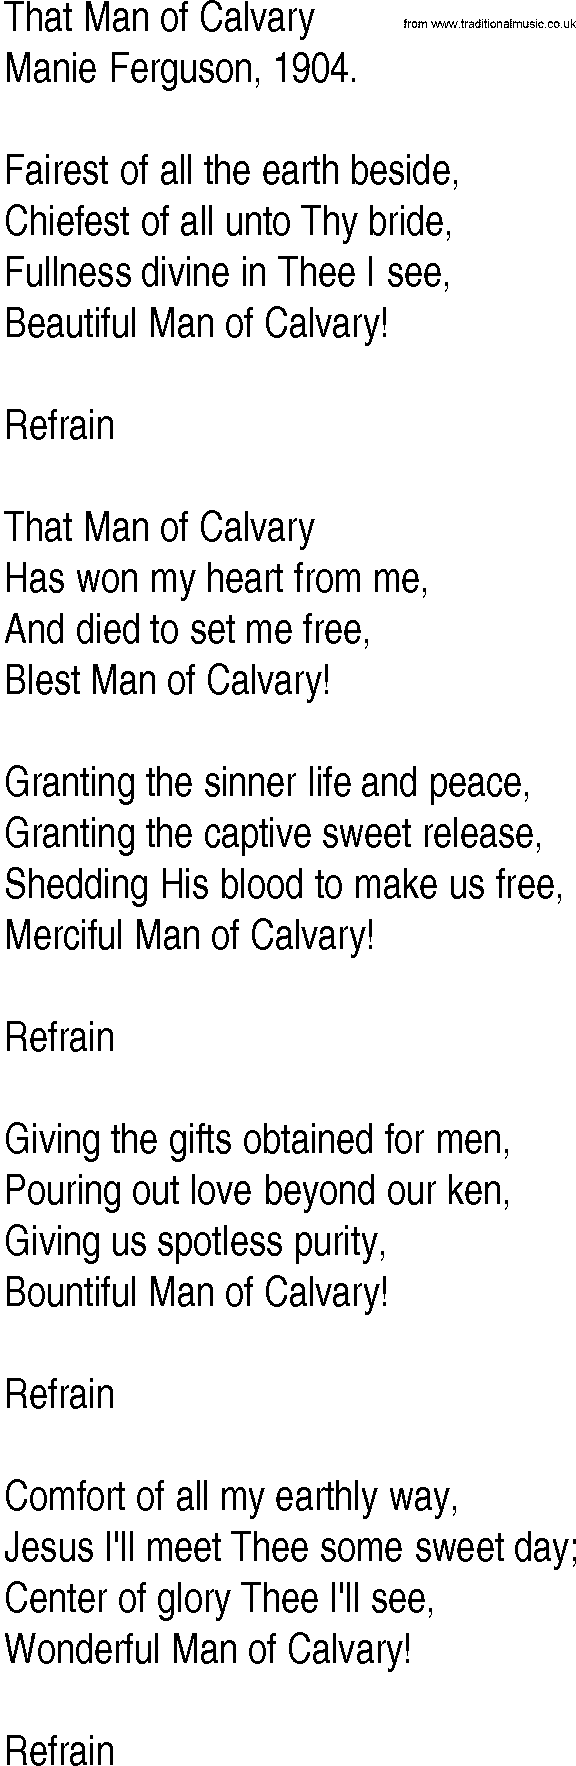 Hymn and Gospel Song: That Man of Calvary by Manie Ferguson lyrics